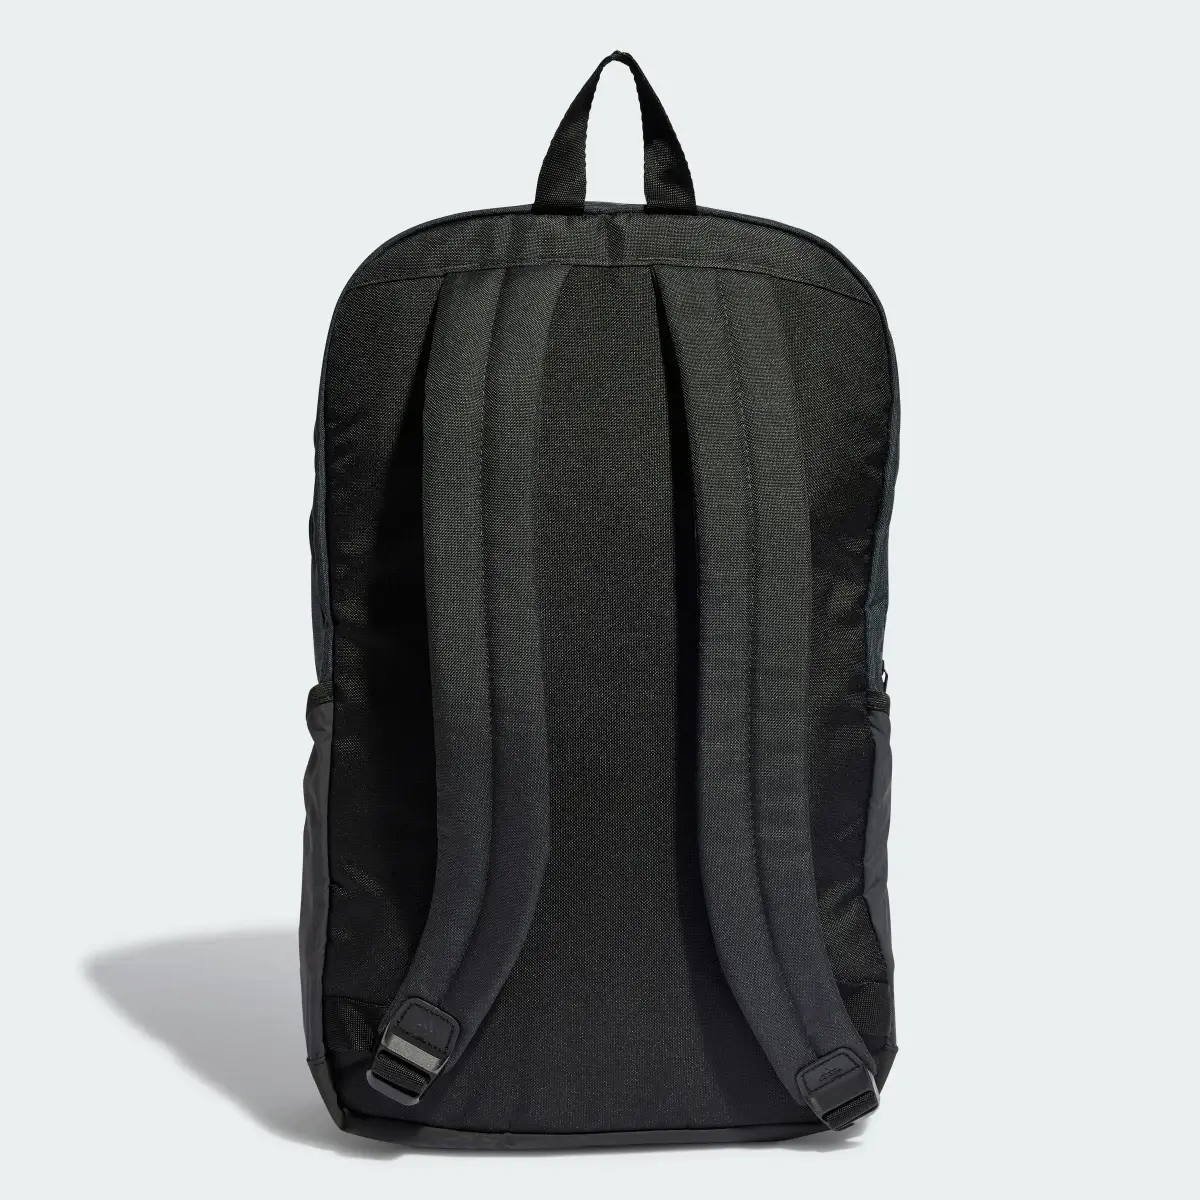 Adidas All Blacks Backpack. 3